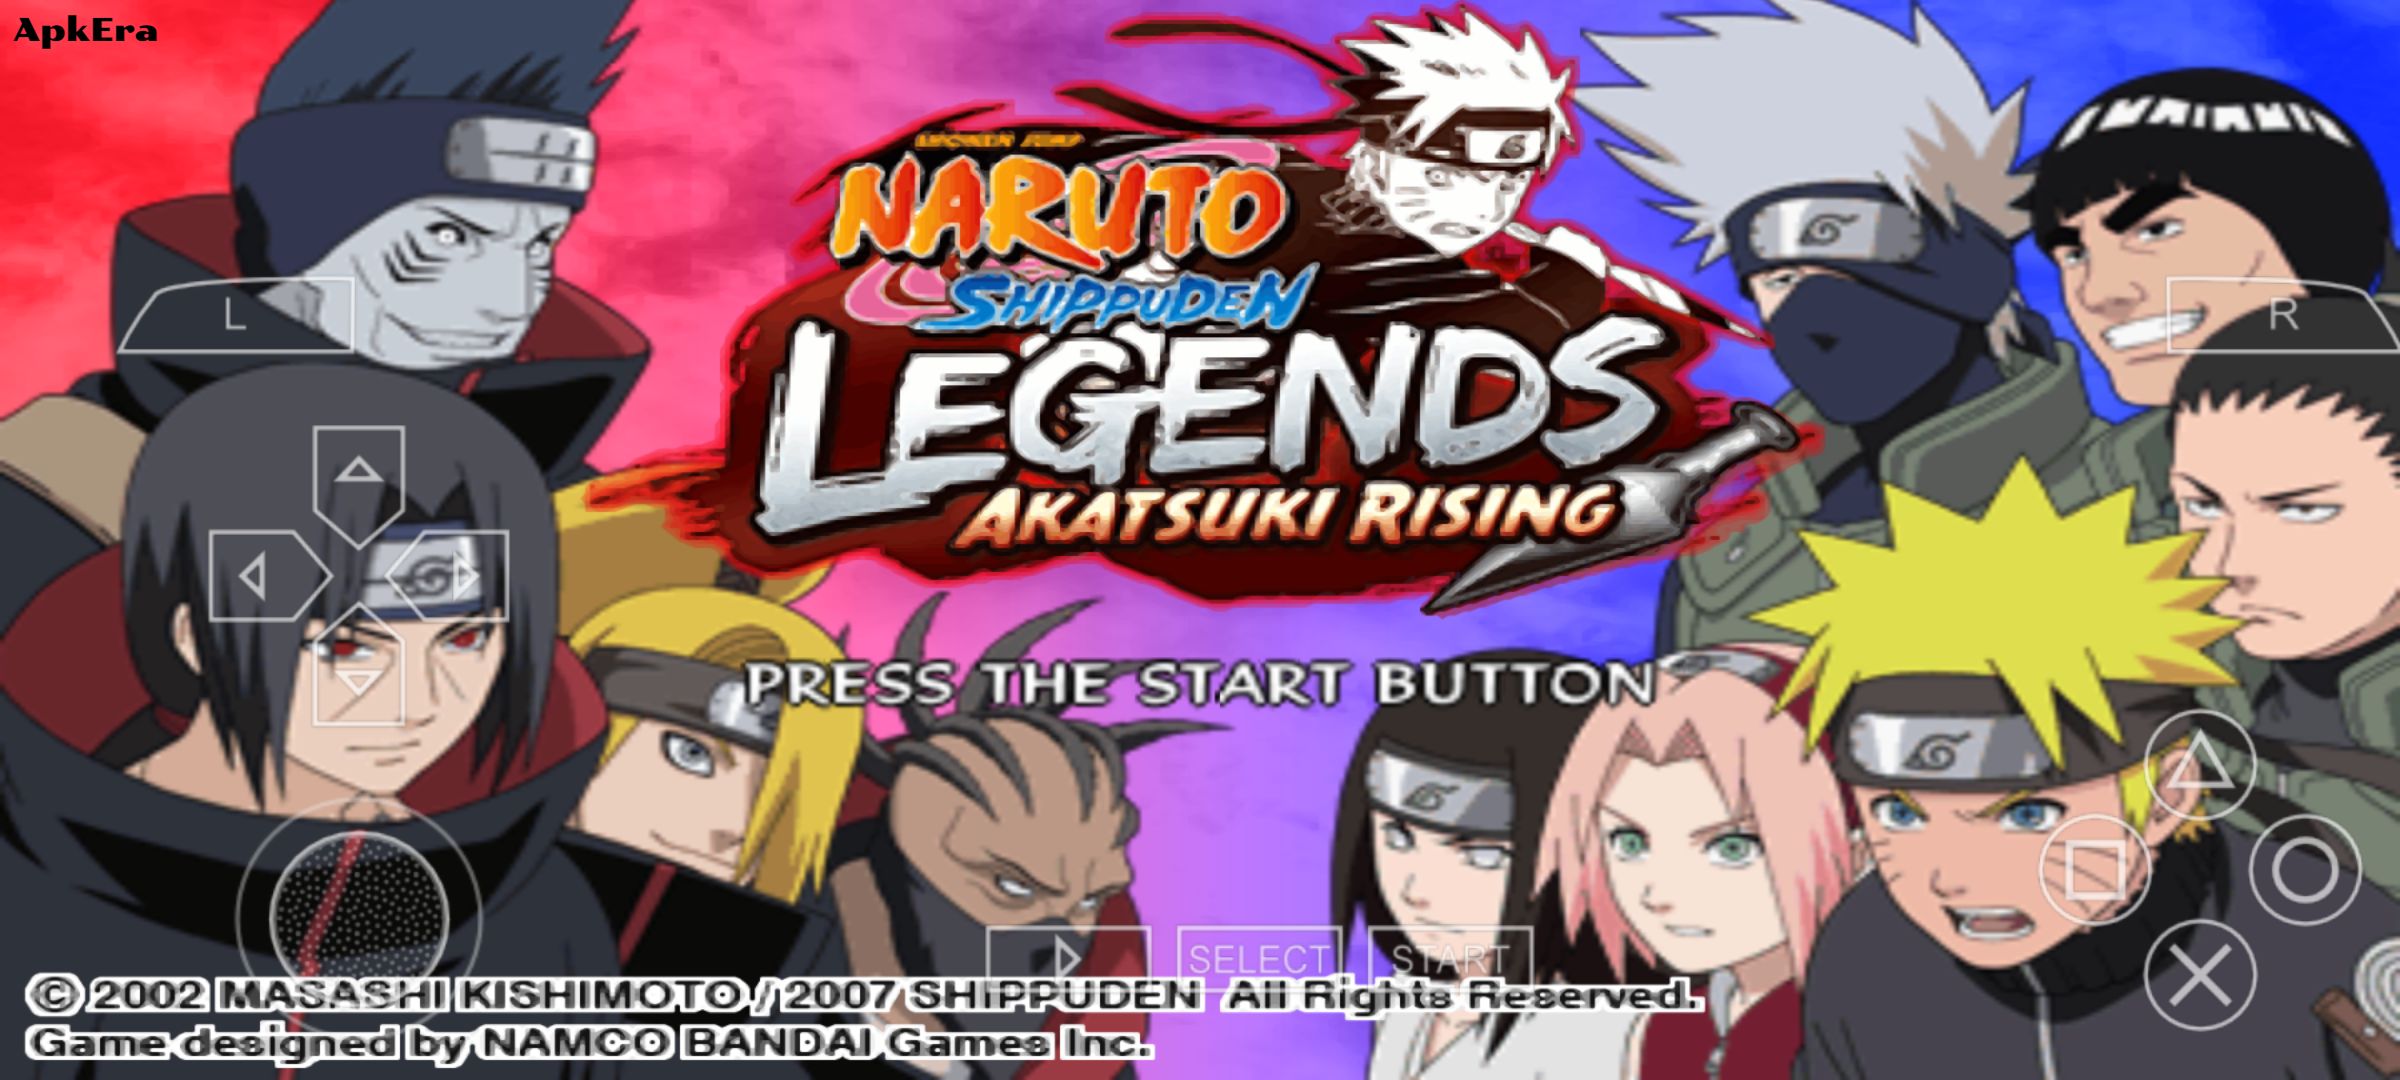 Naruto Shippuden: Legends: Akatsuki Rising PPSSPP Download